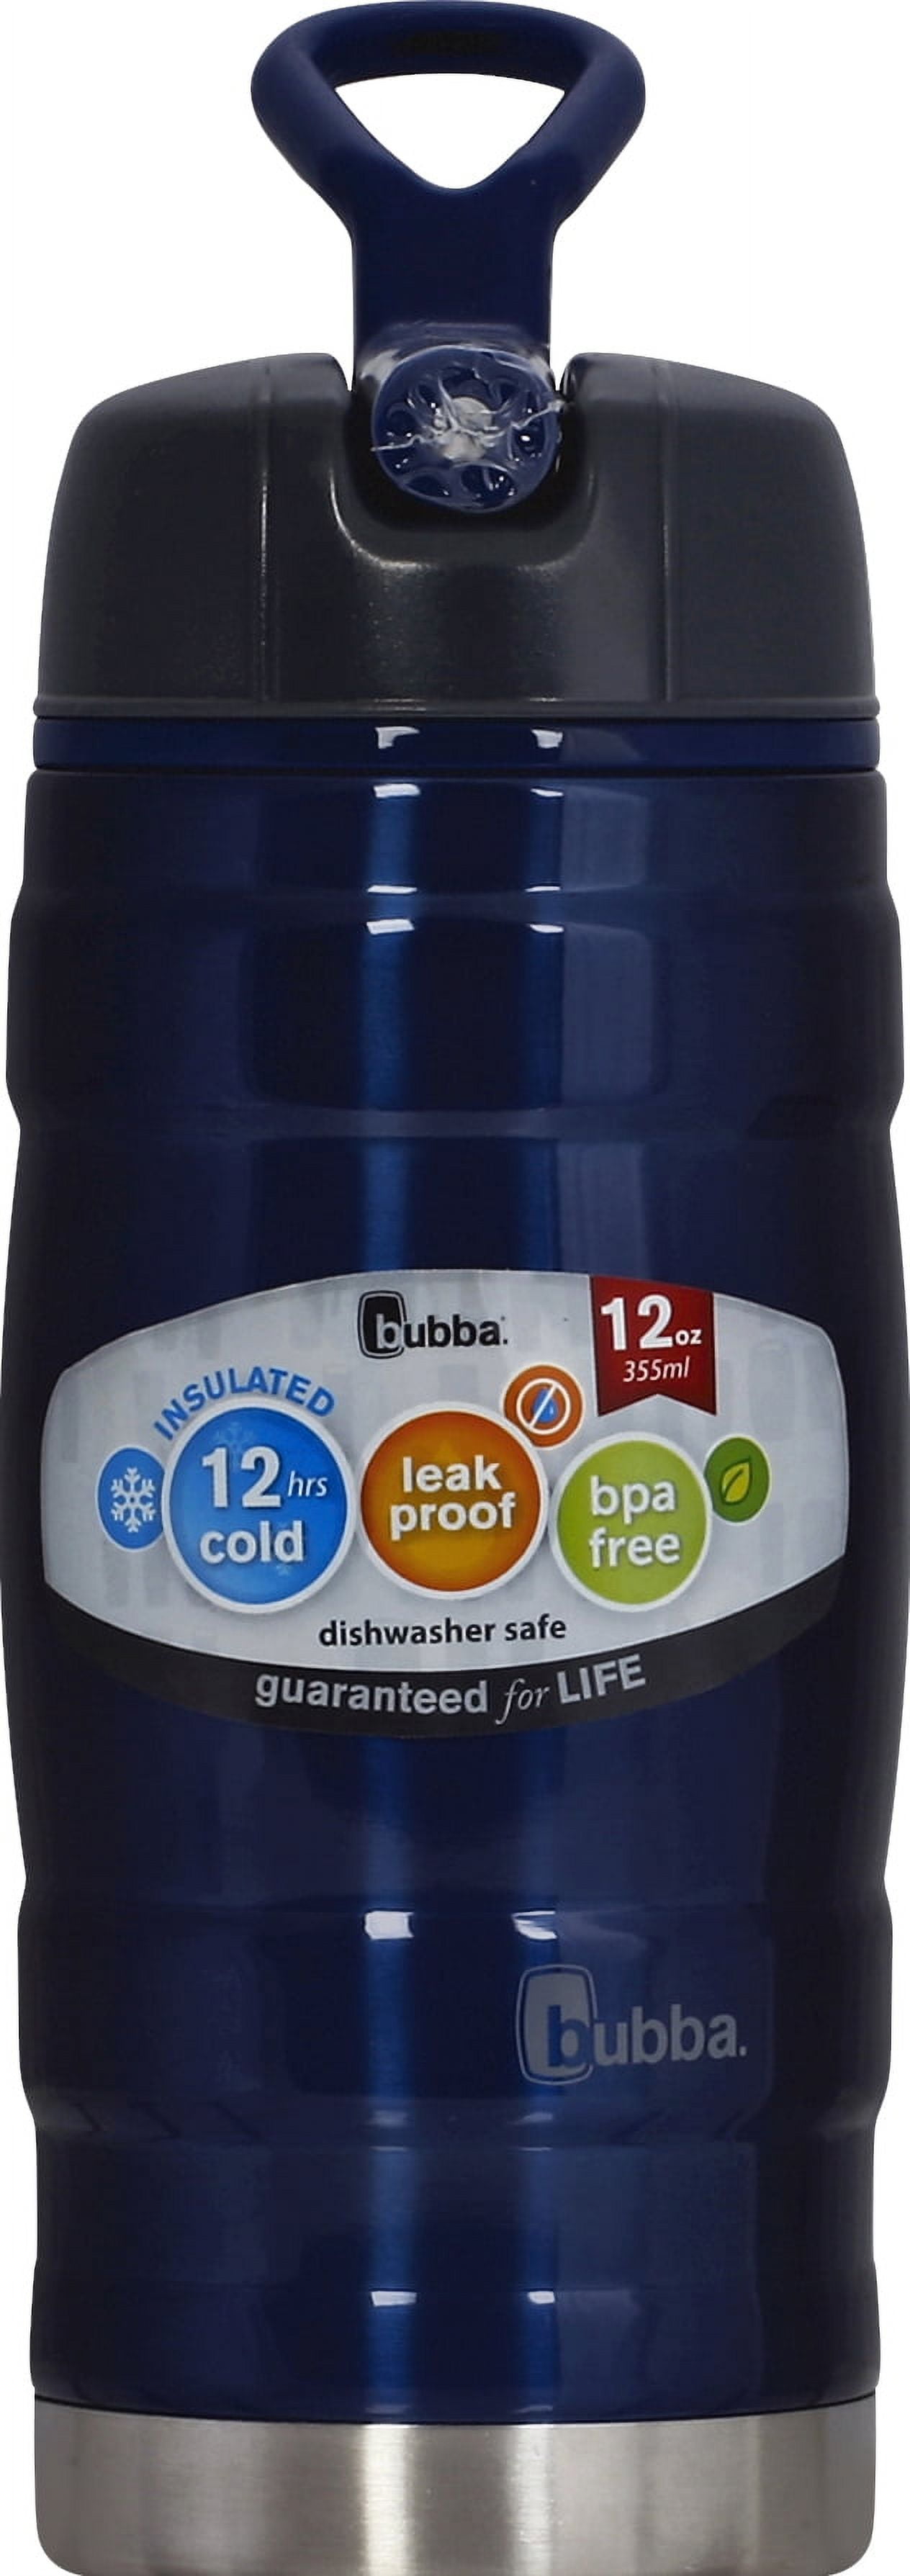 bubba Hero Sport Insulated Stainless Steel Kids Water Bottle, 8 oz., Blue